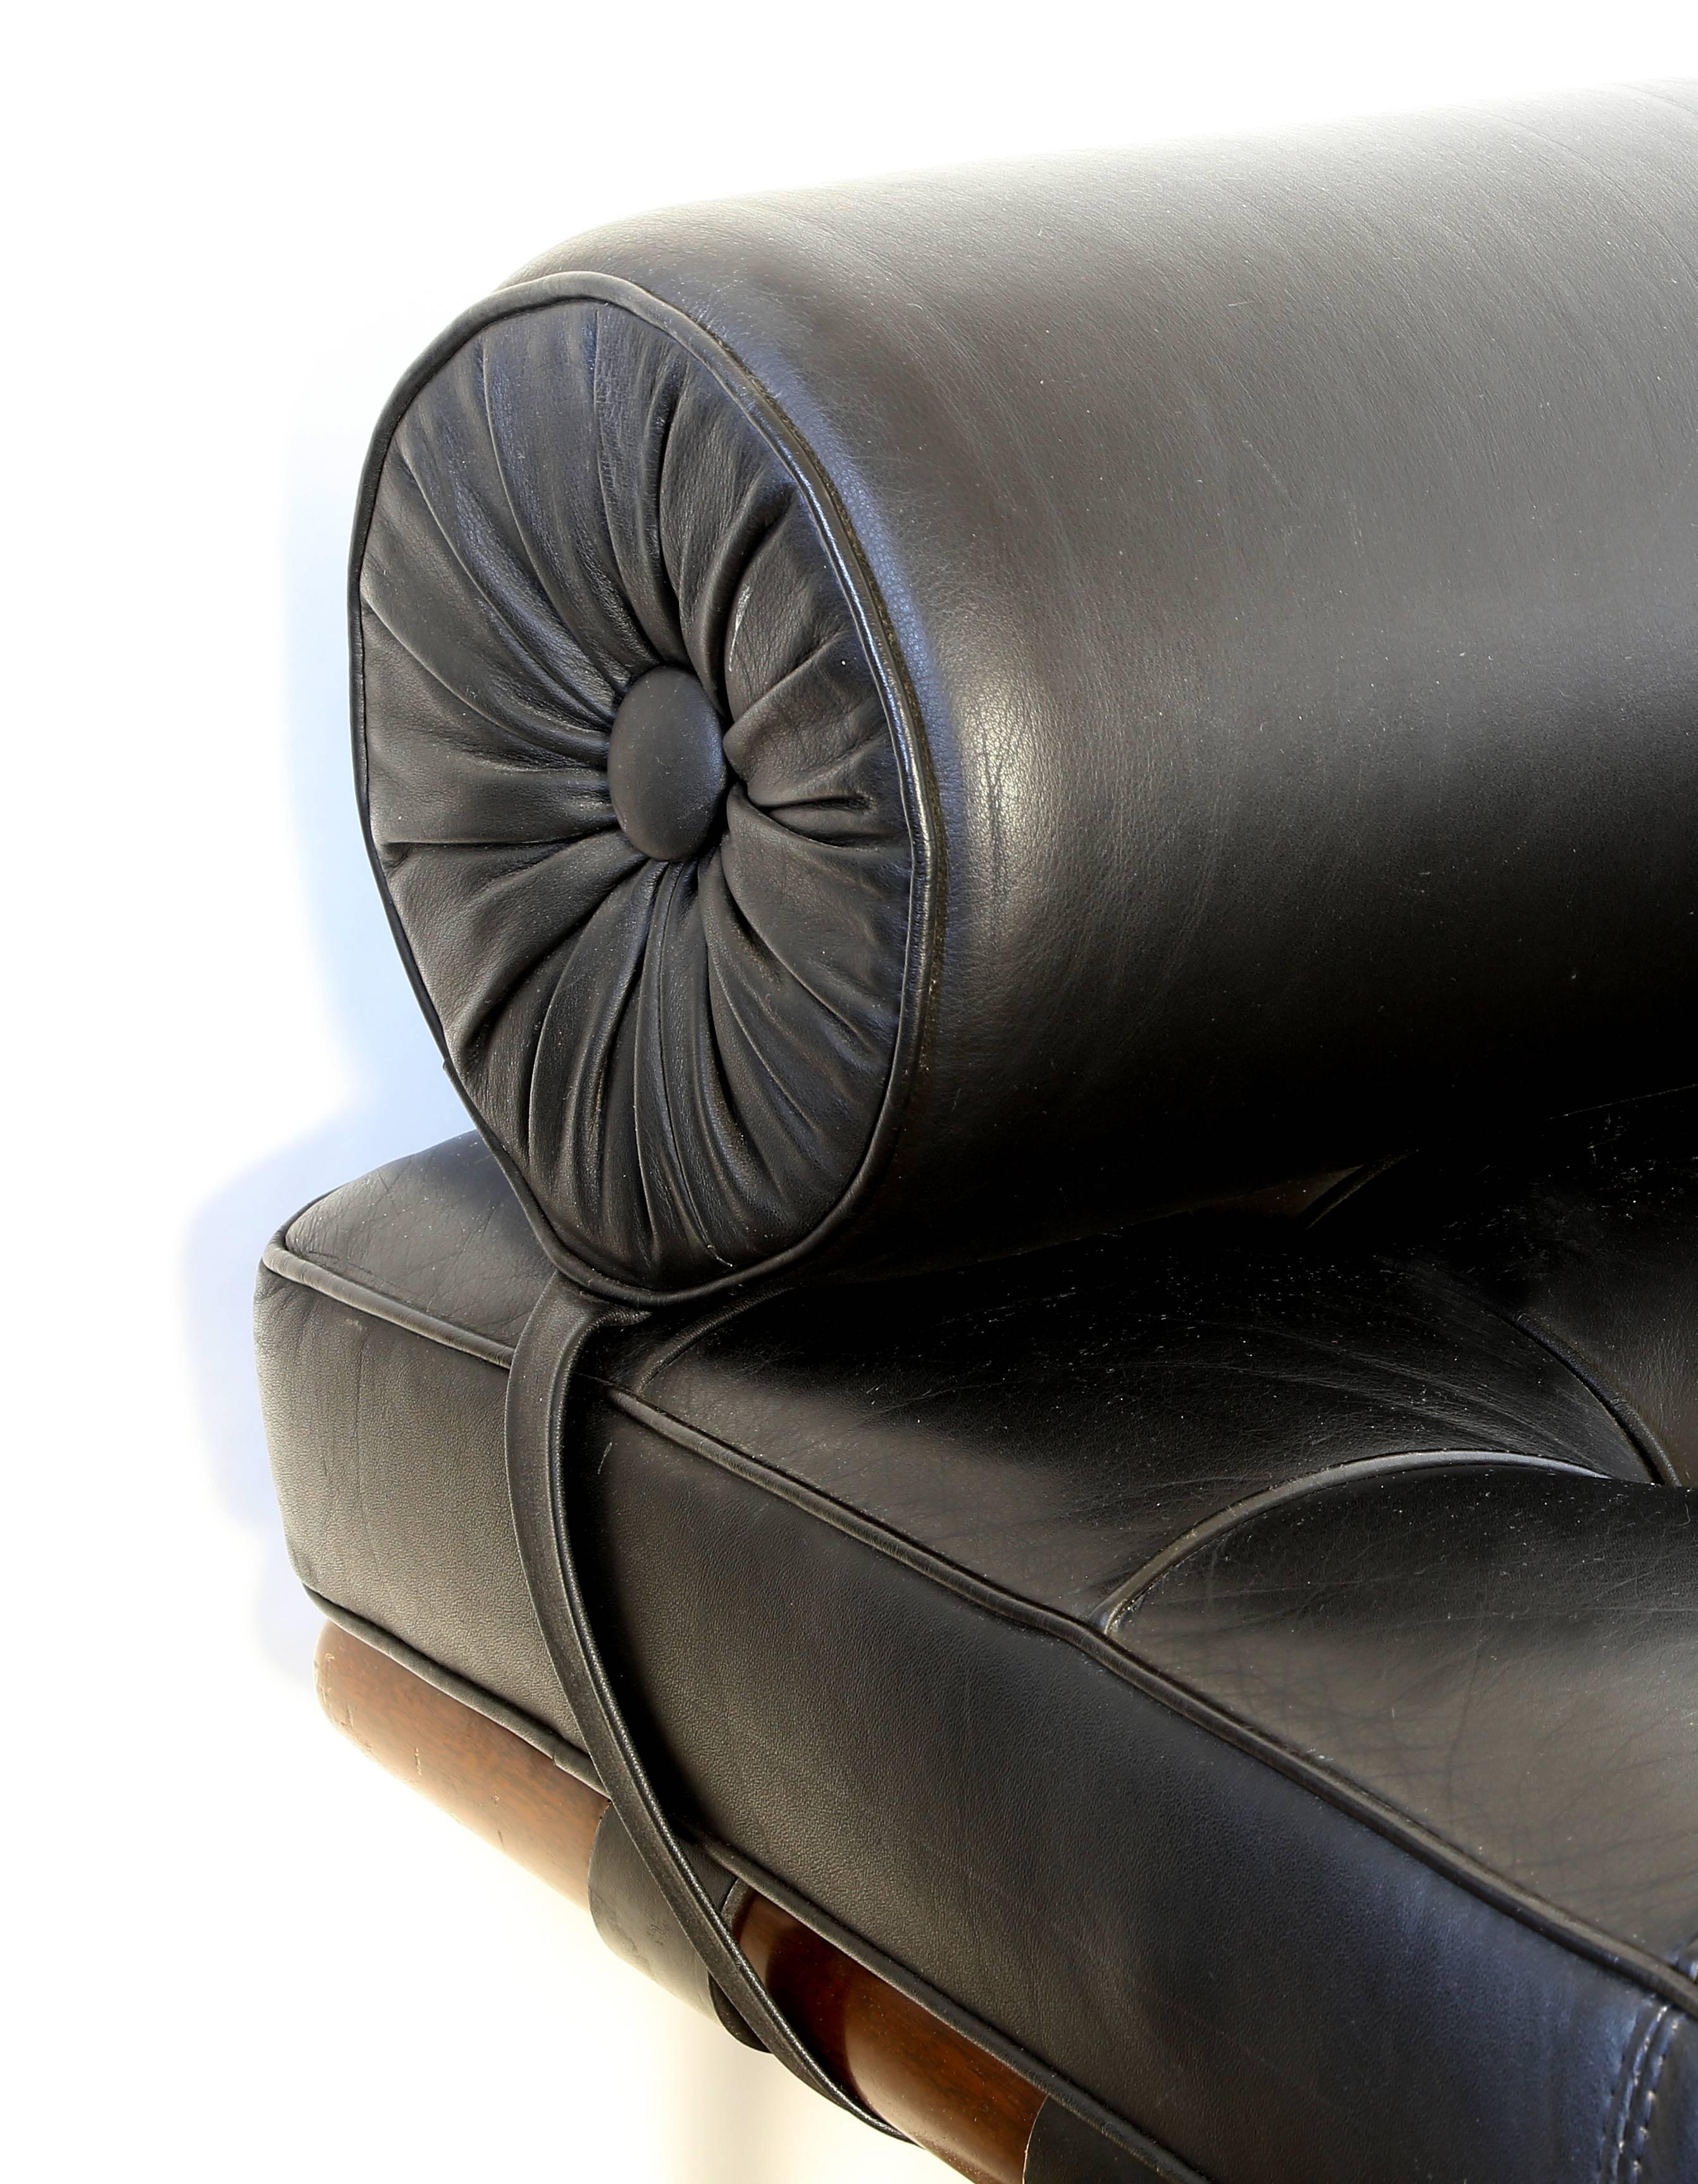 Vintage Mies van der Rohe chaise or sofa. Chrome legs, walnut base, black leather.